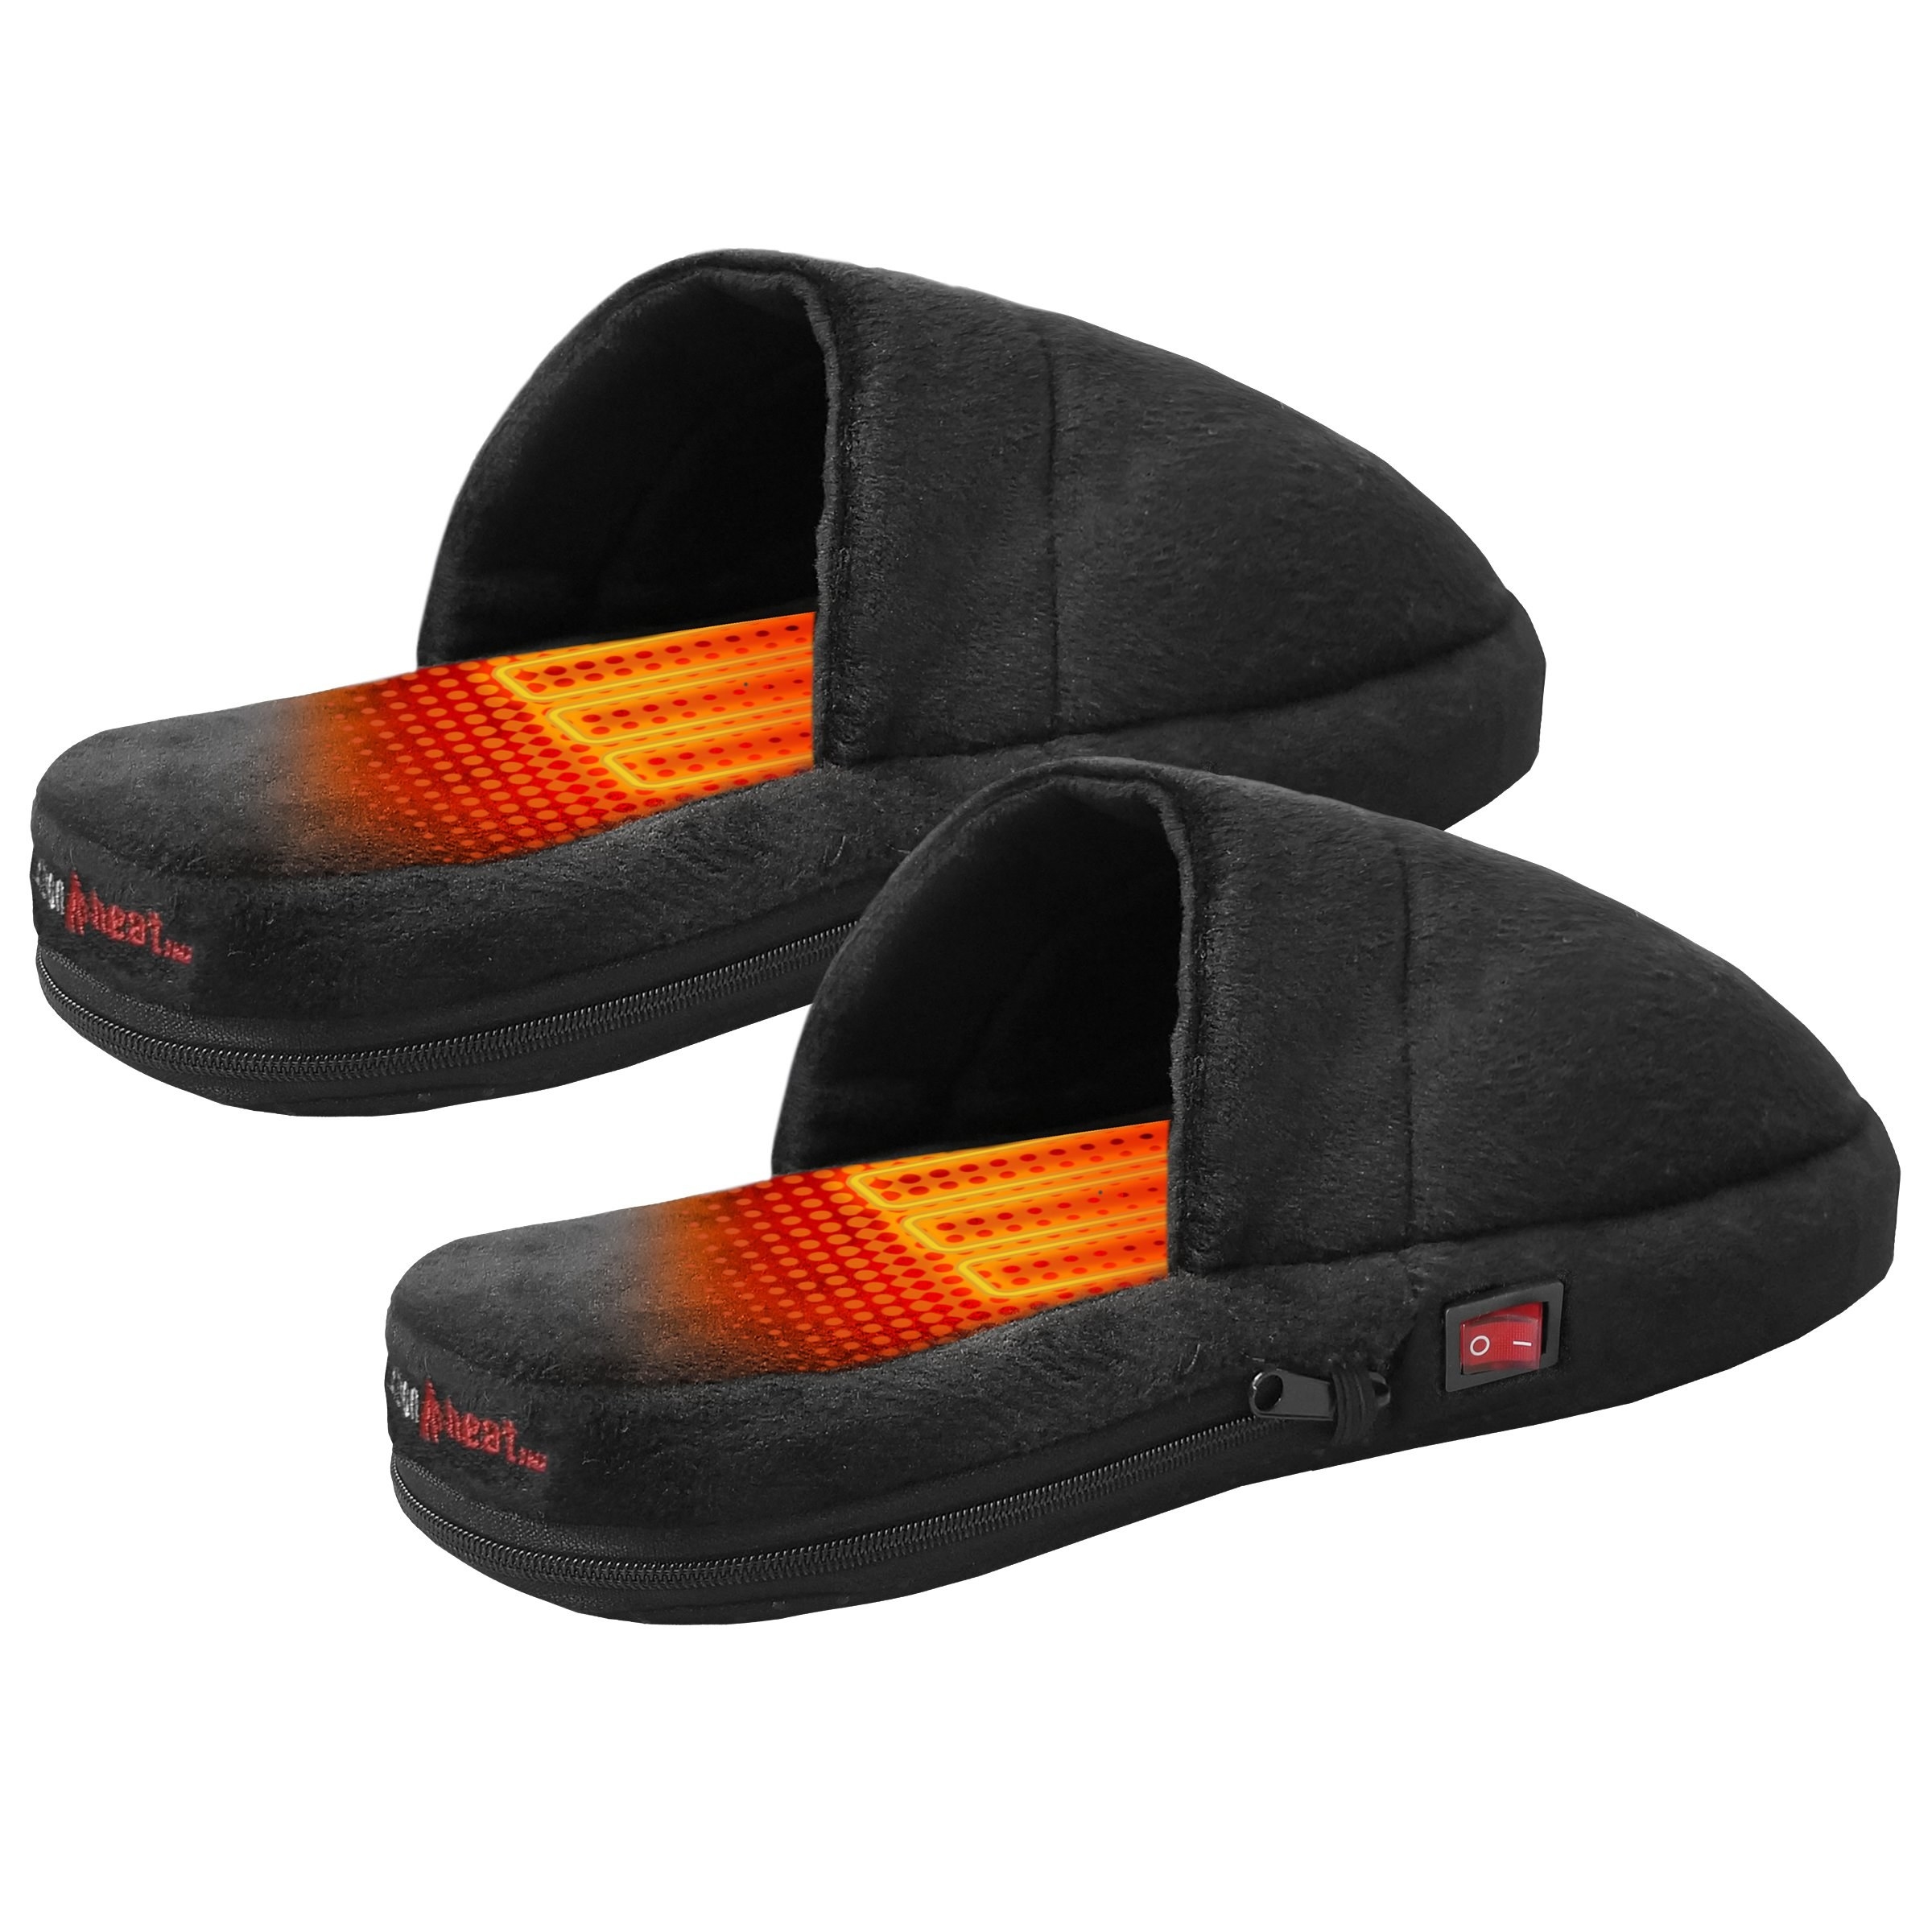 Heated slippers